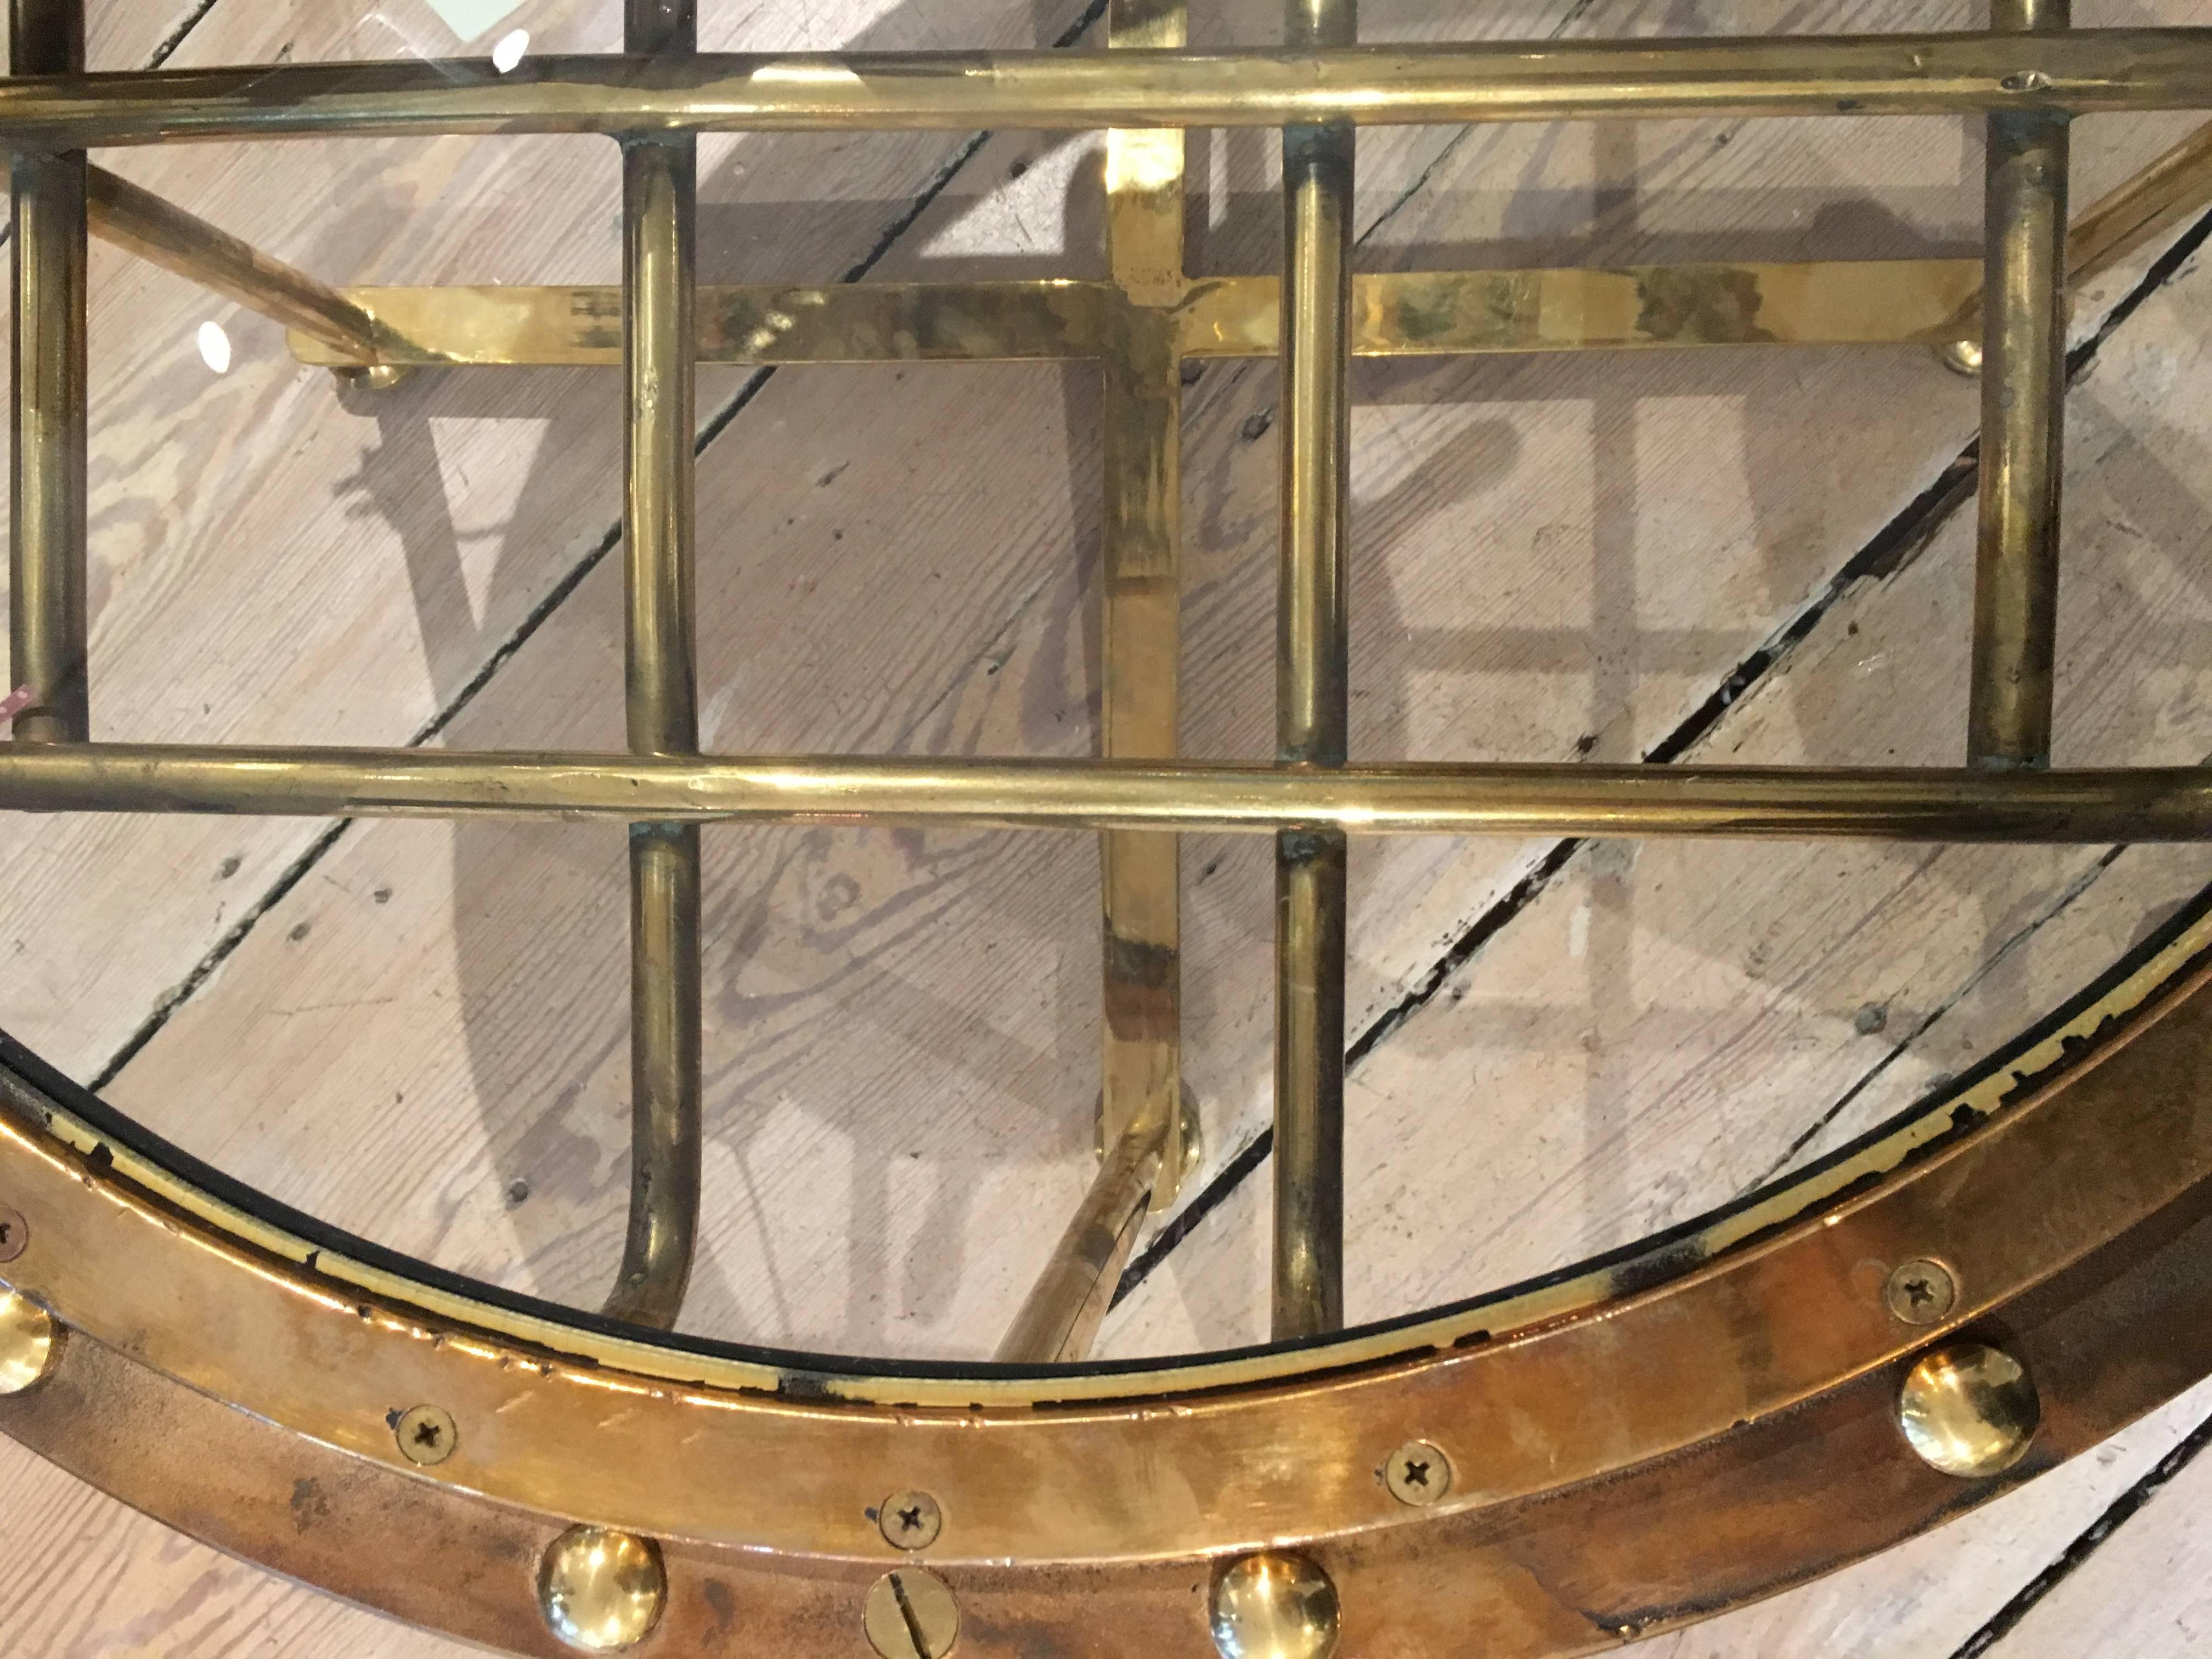 20th Century Rare Original Nautical Brass Ship's Porthole Converted to Table